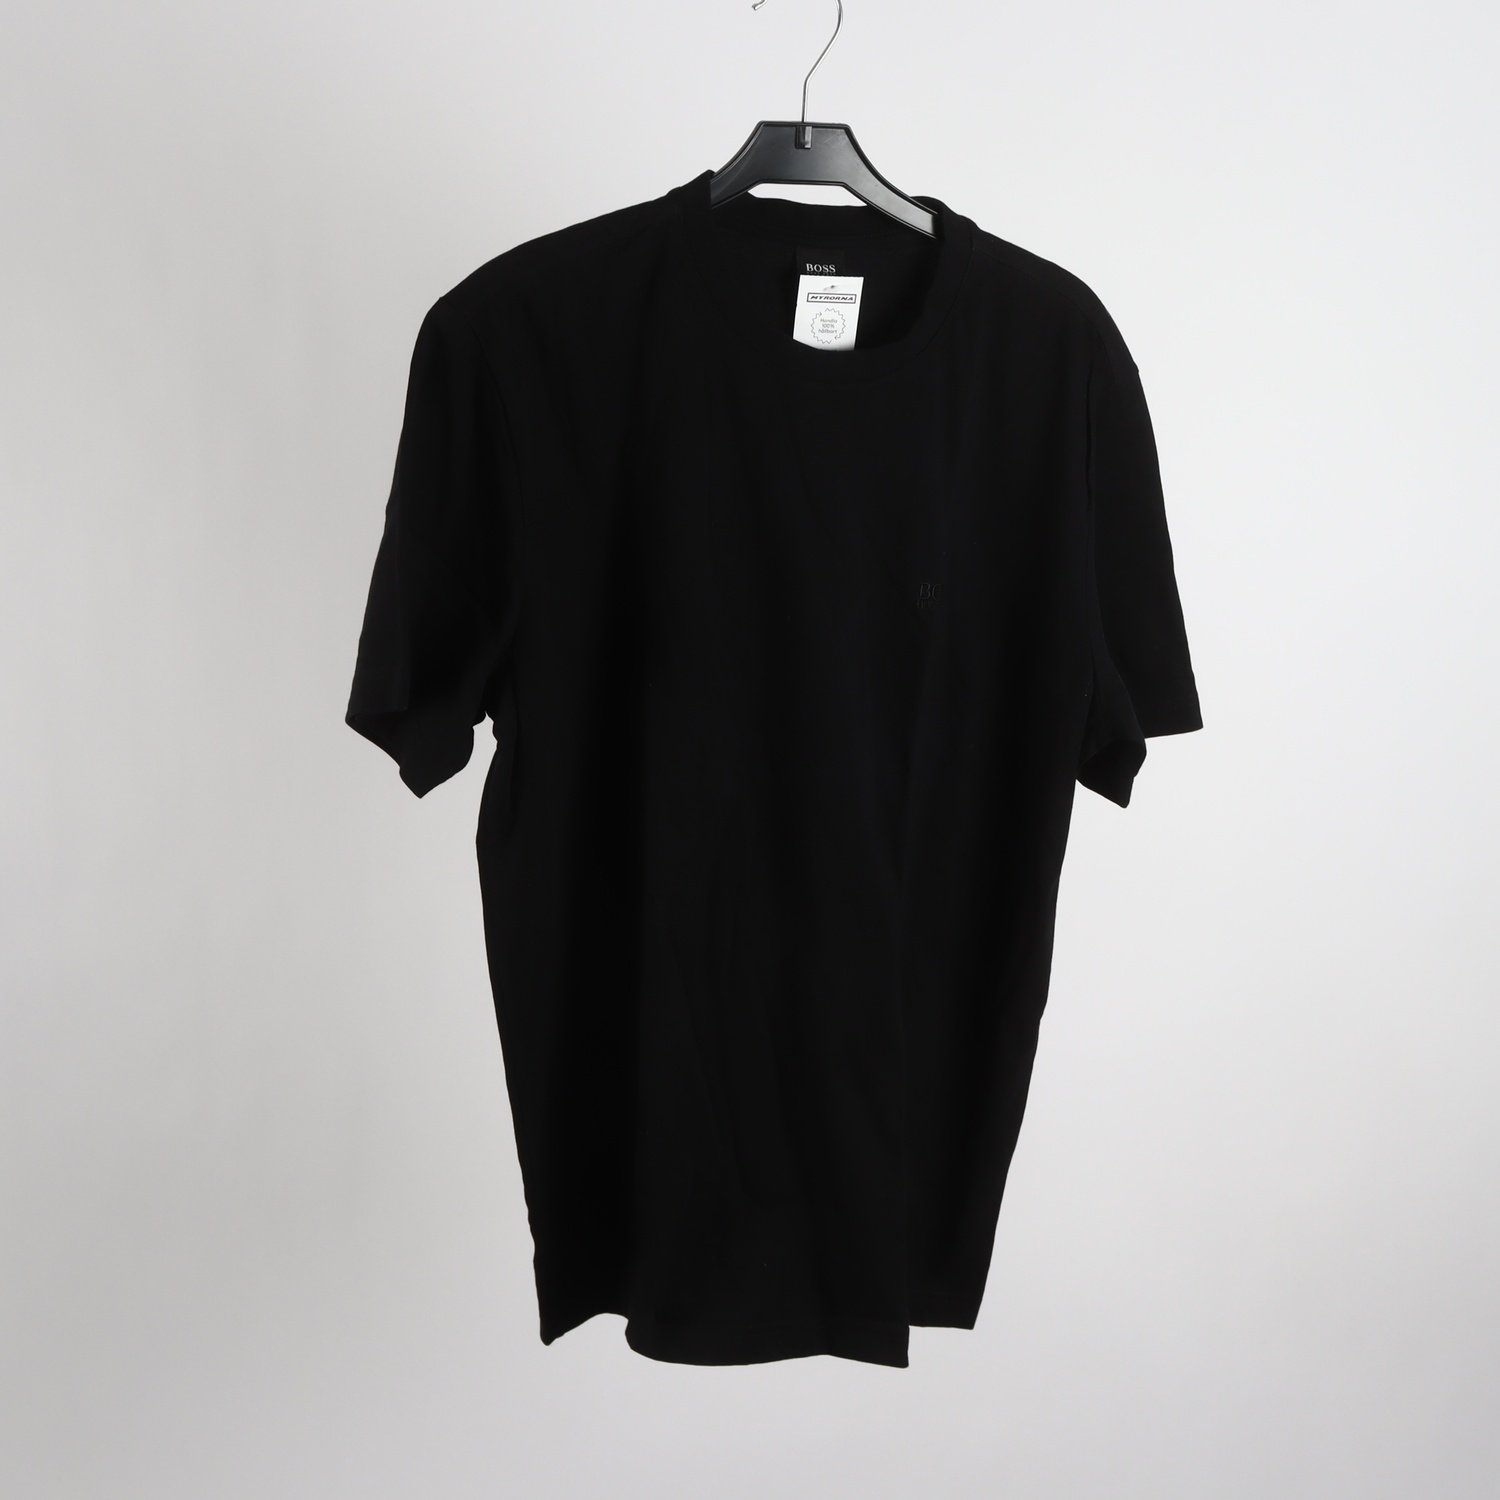 T-Shirt, Hugo Boss, svart, stl. L